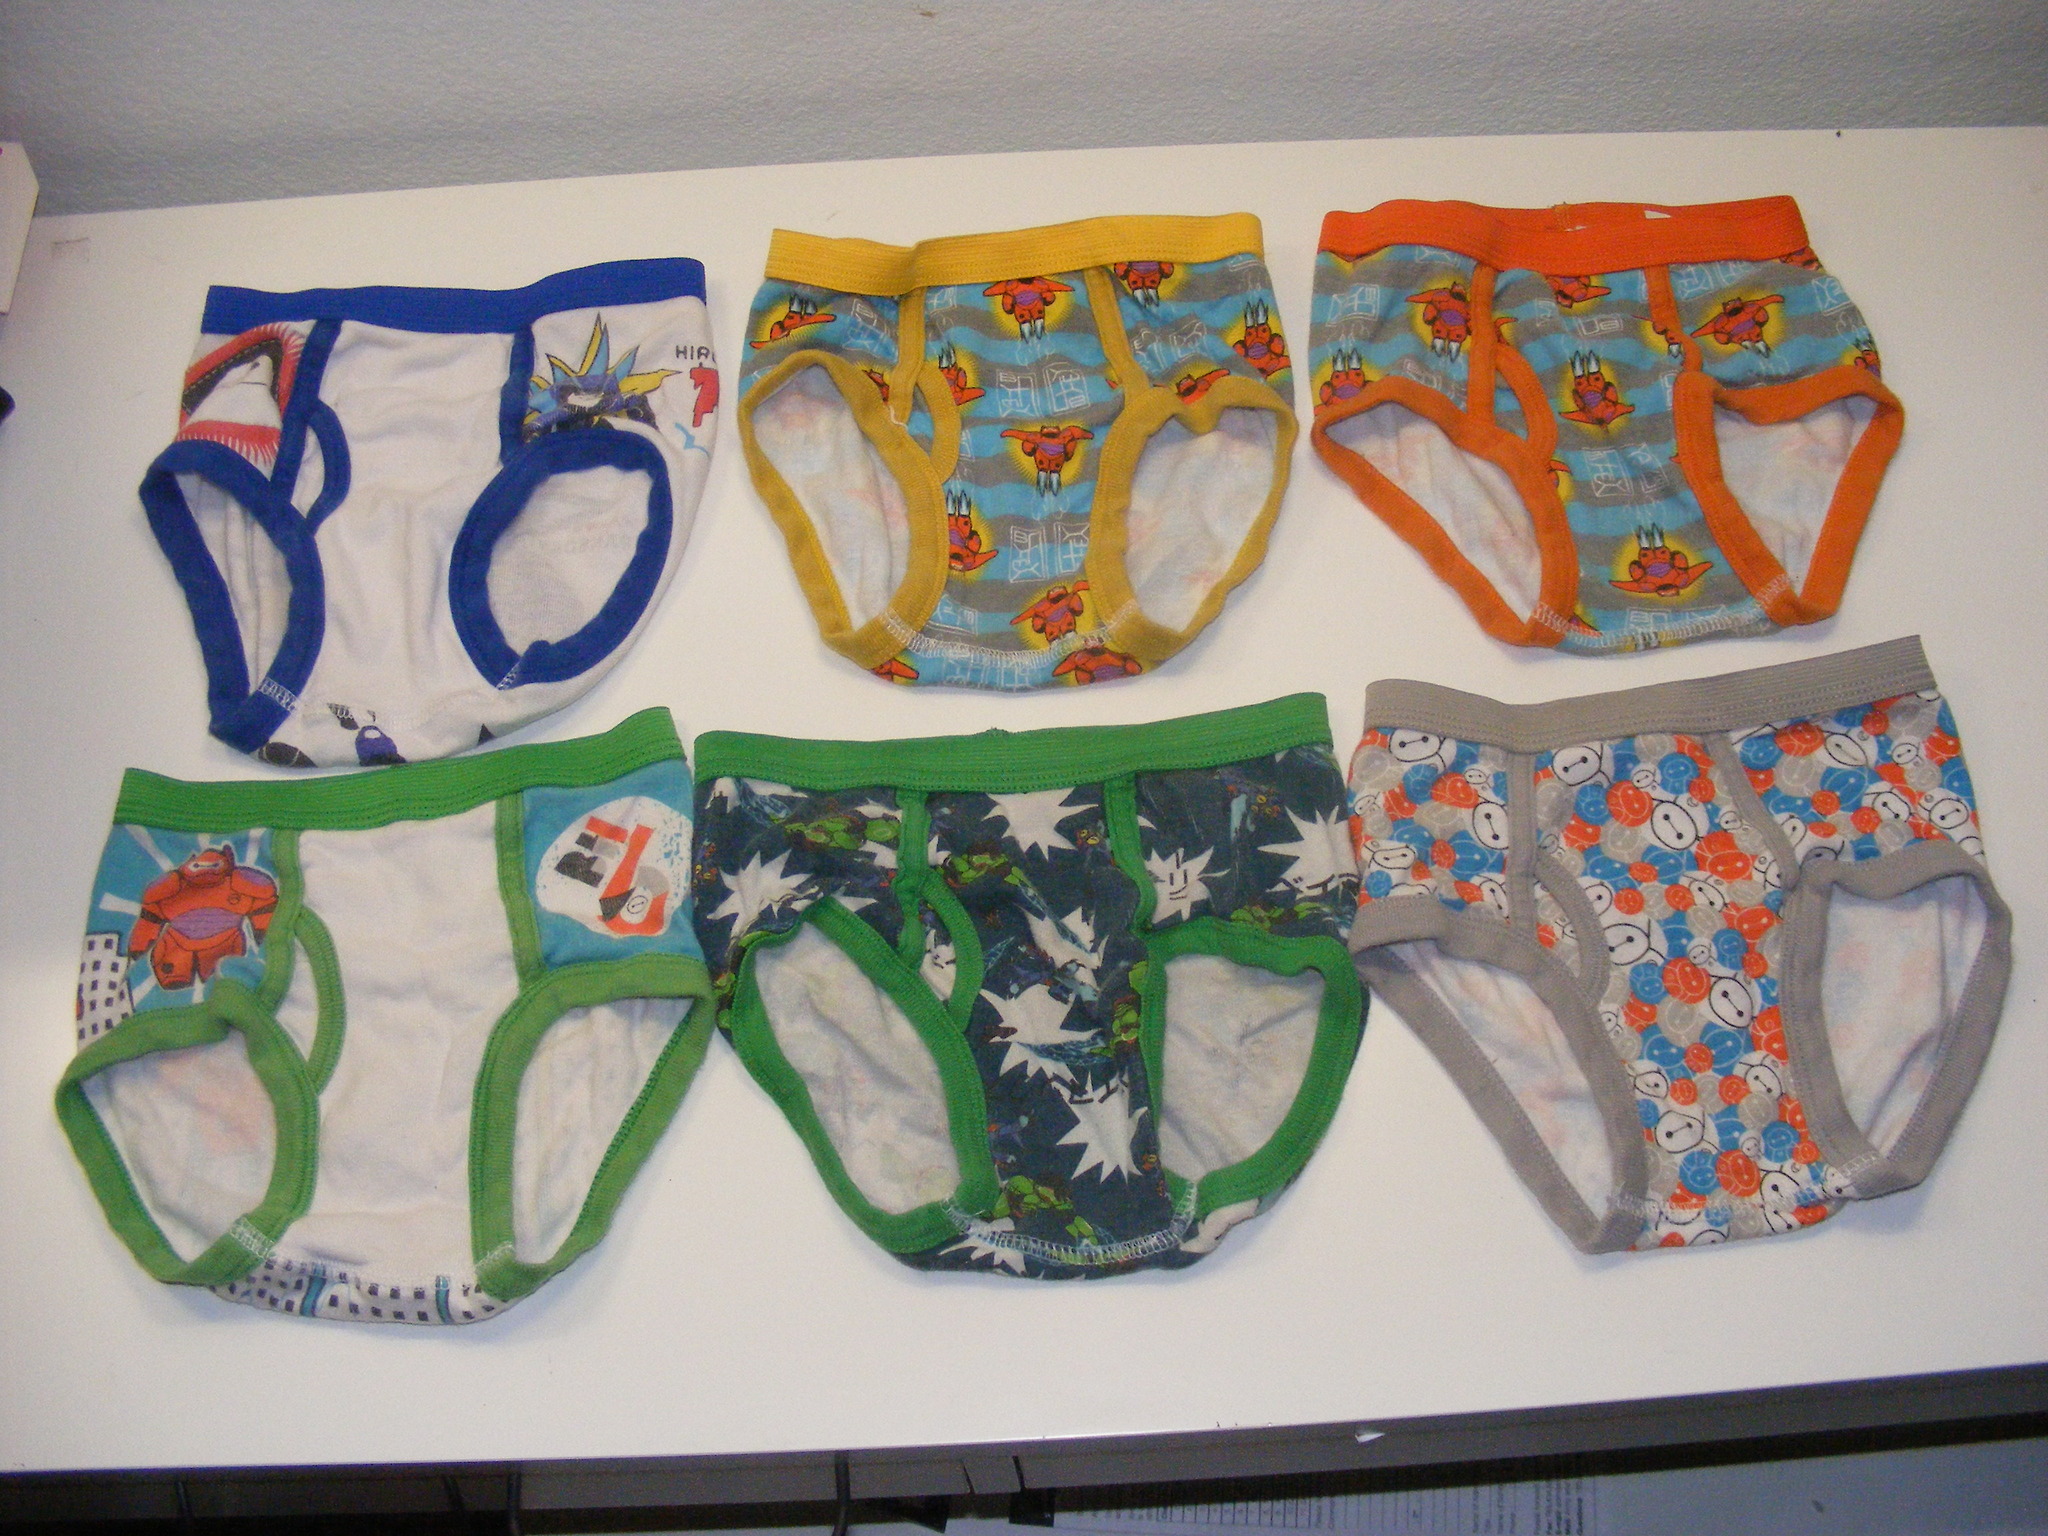 adeyanju george recommends Boys In Underwear Tumblr